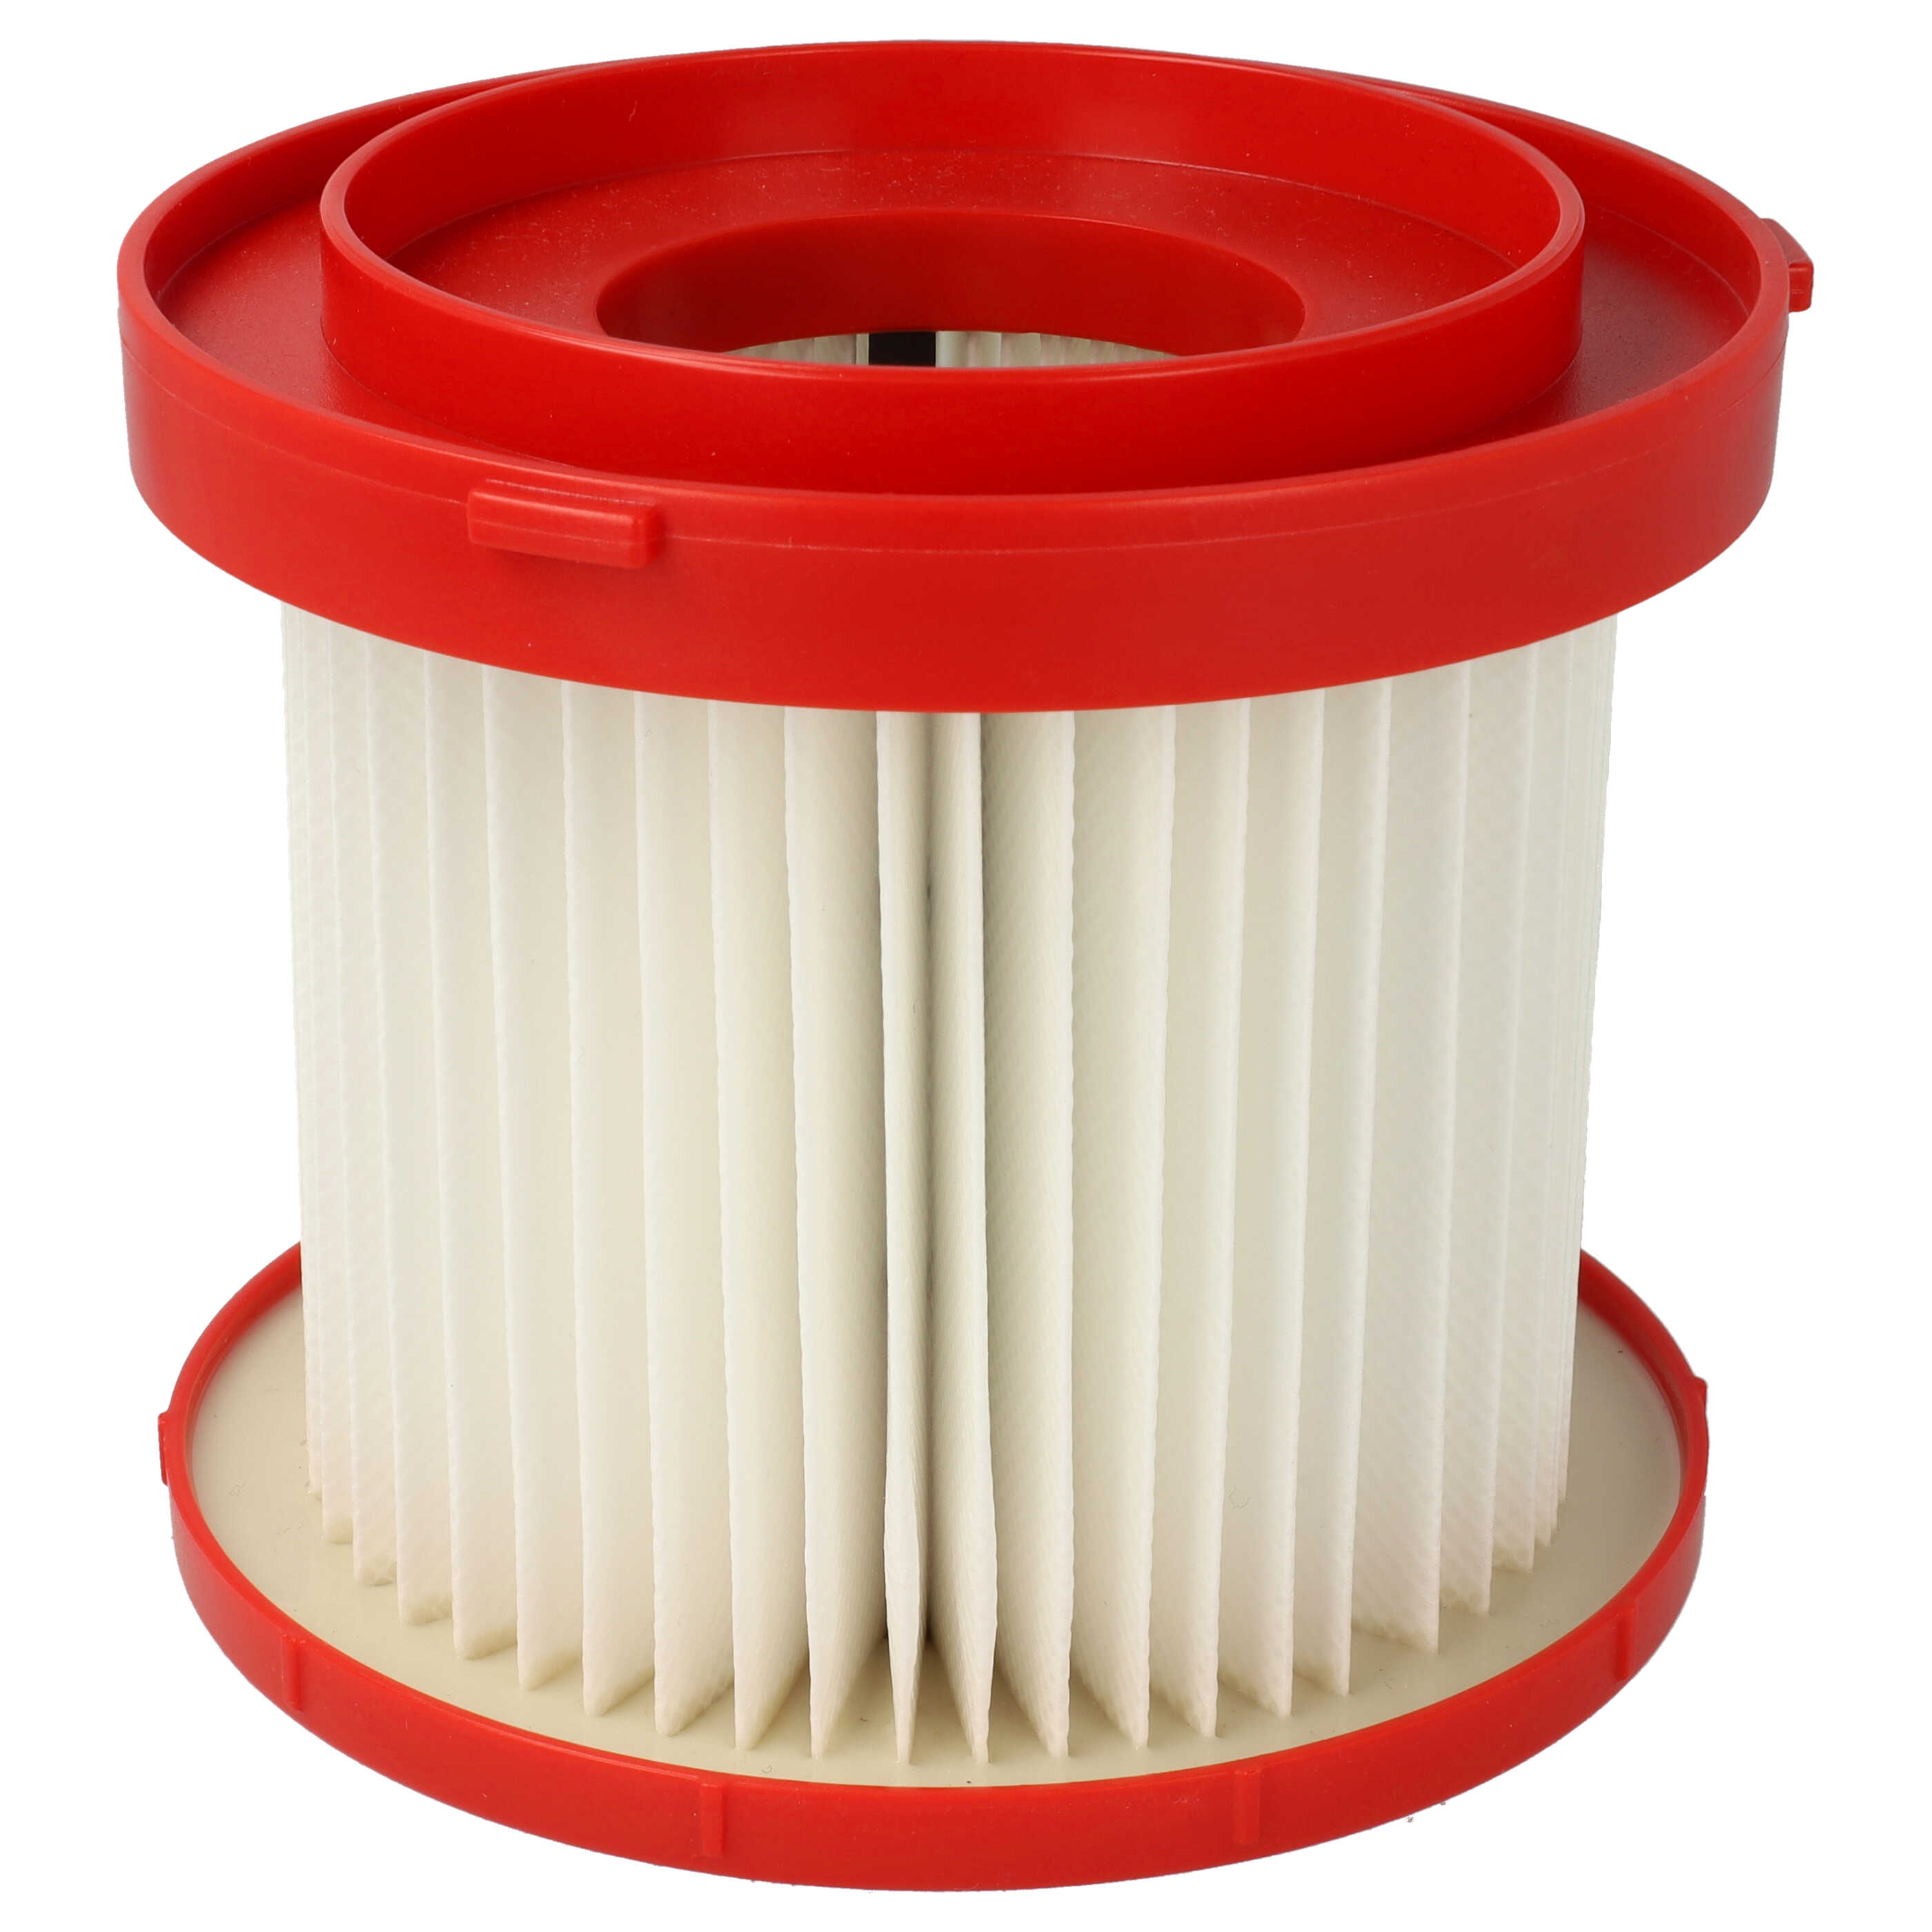 Filtro reemplaza Milwaukee 4931465230, 4058546360368, 4932478754 para aspiradora - filtro Hepa blanco / rojo